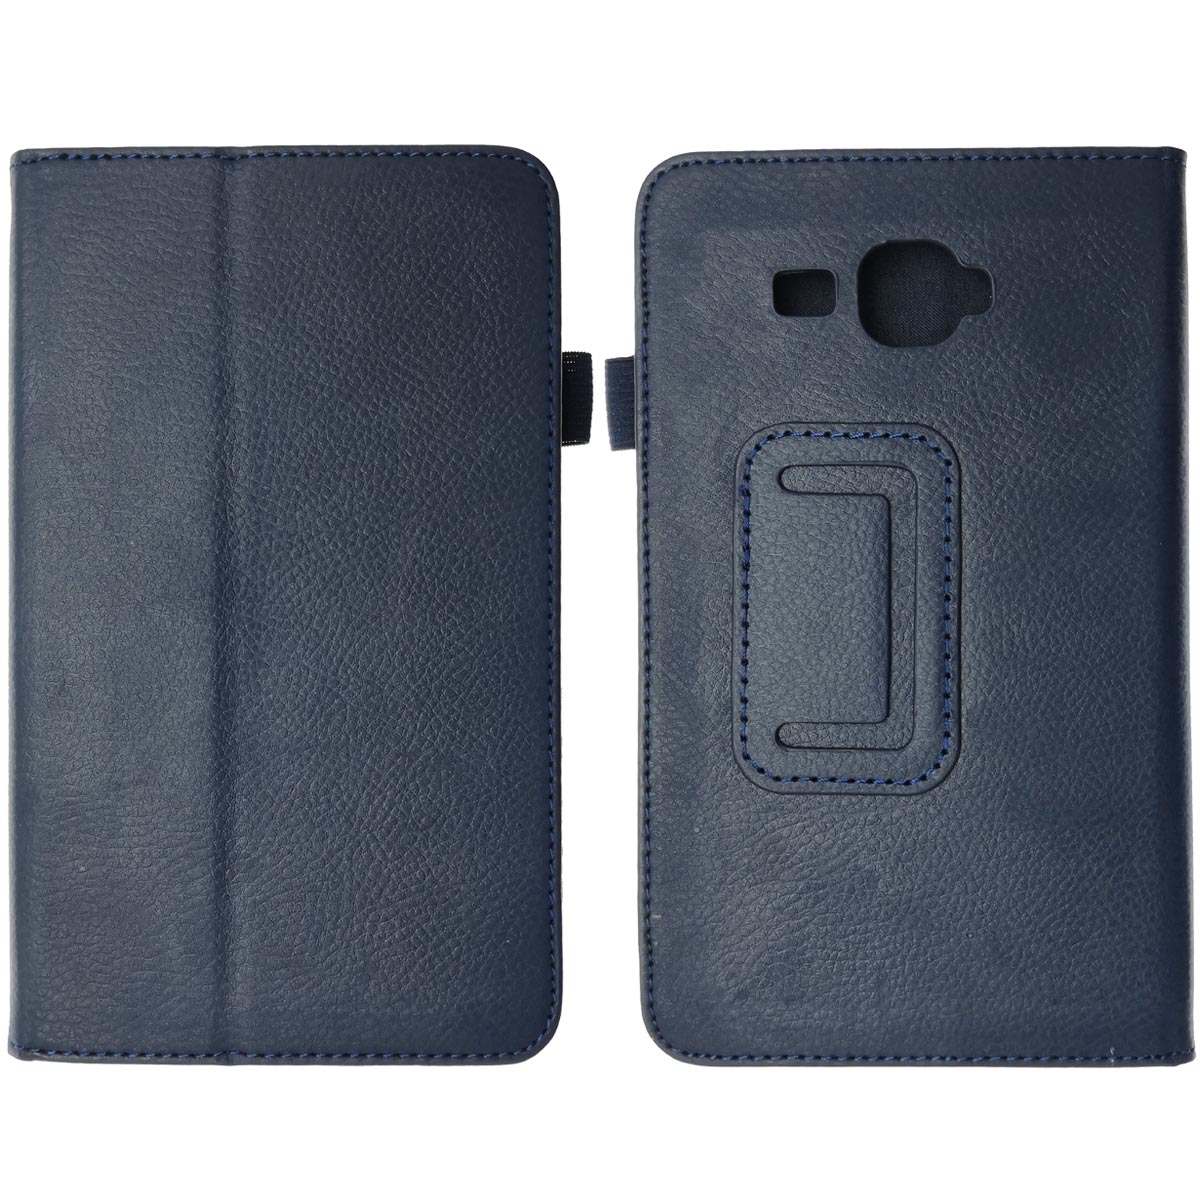 Чехол книжка для планшета SAMSUNG Galaxy Tab A 7.0 (SM-T280, SM-T285), экокожа, цвет темно синий